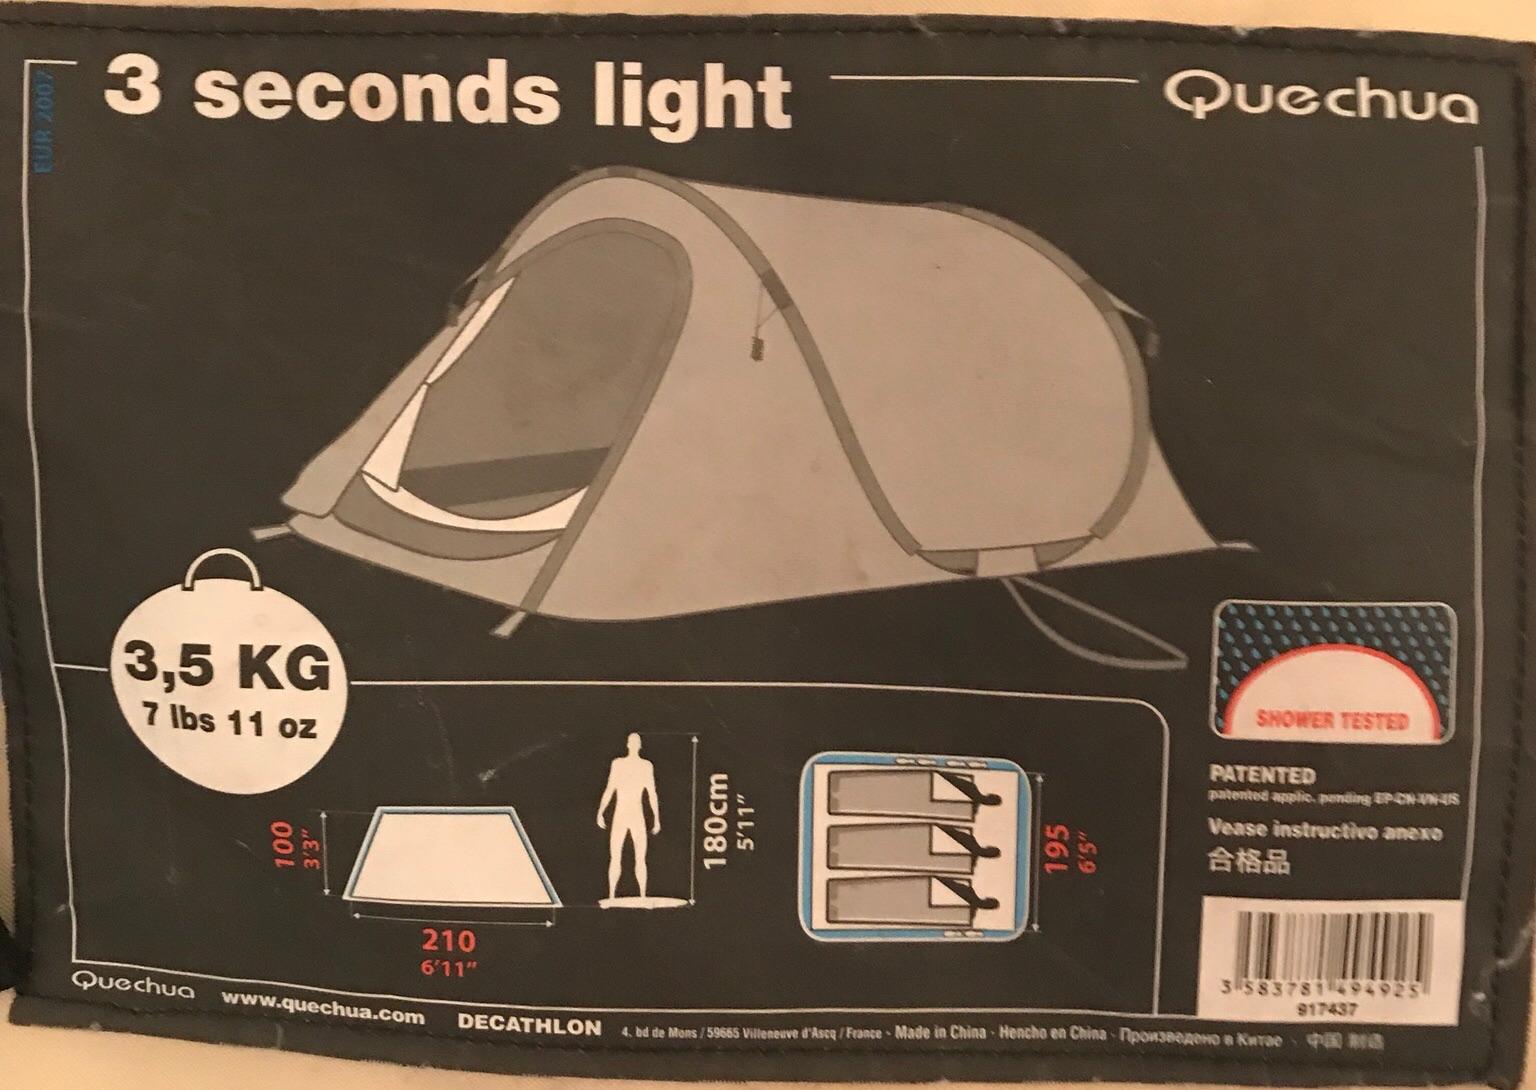 Quechua 3 Seconds Light Tent in S61 